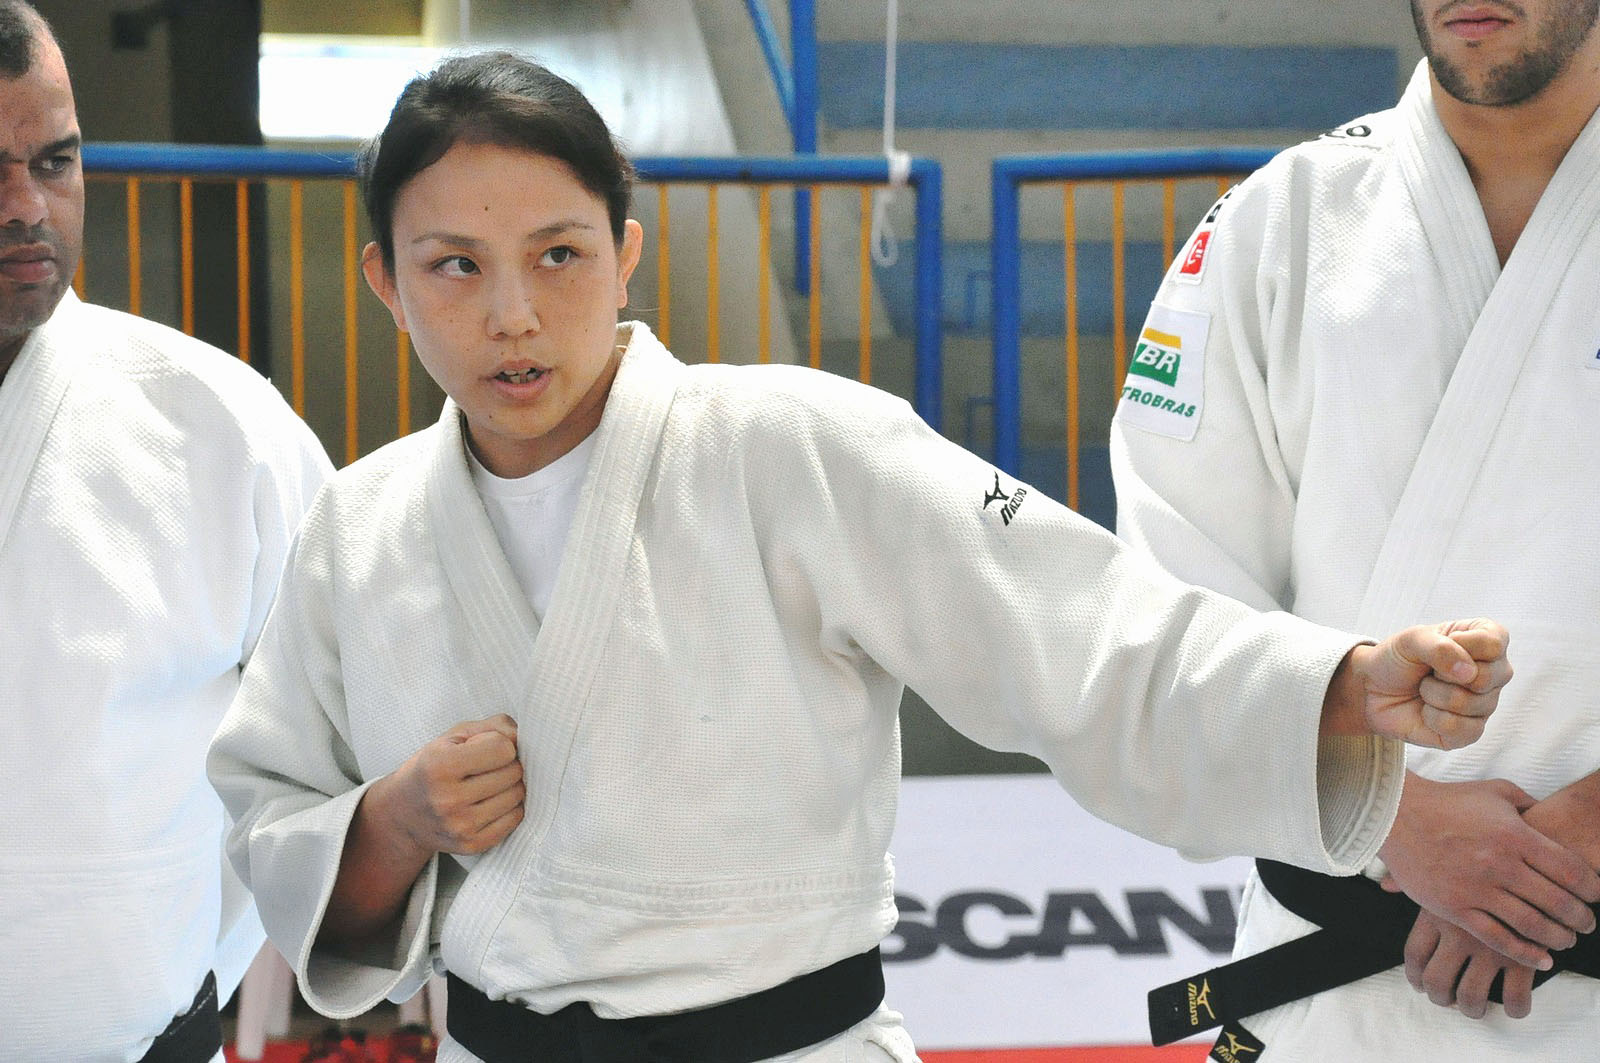 Female Japanese judoka coaching Brazil team at Rio Olympics - The Japan ...